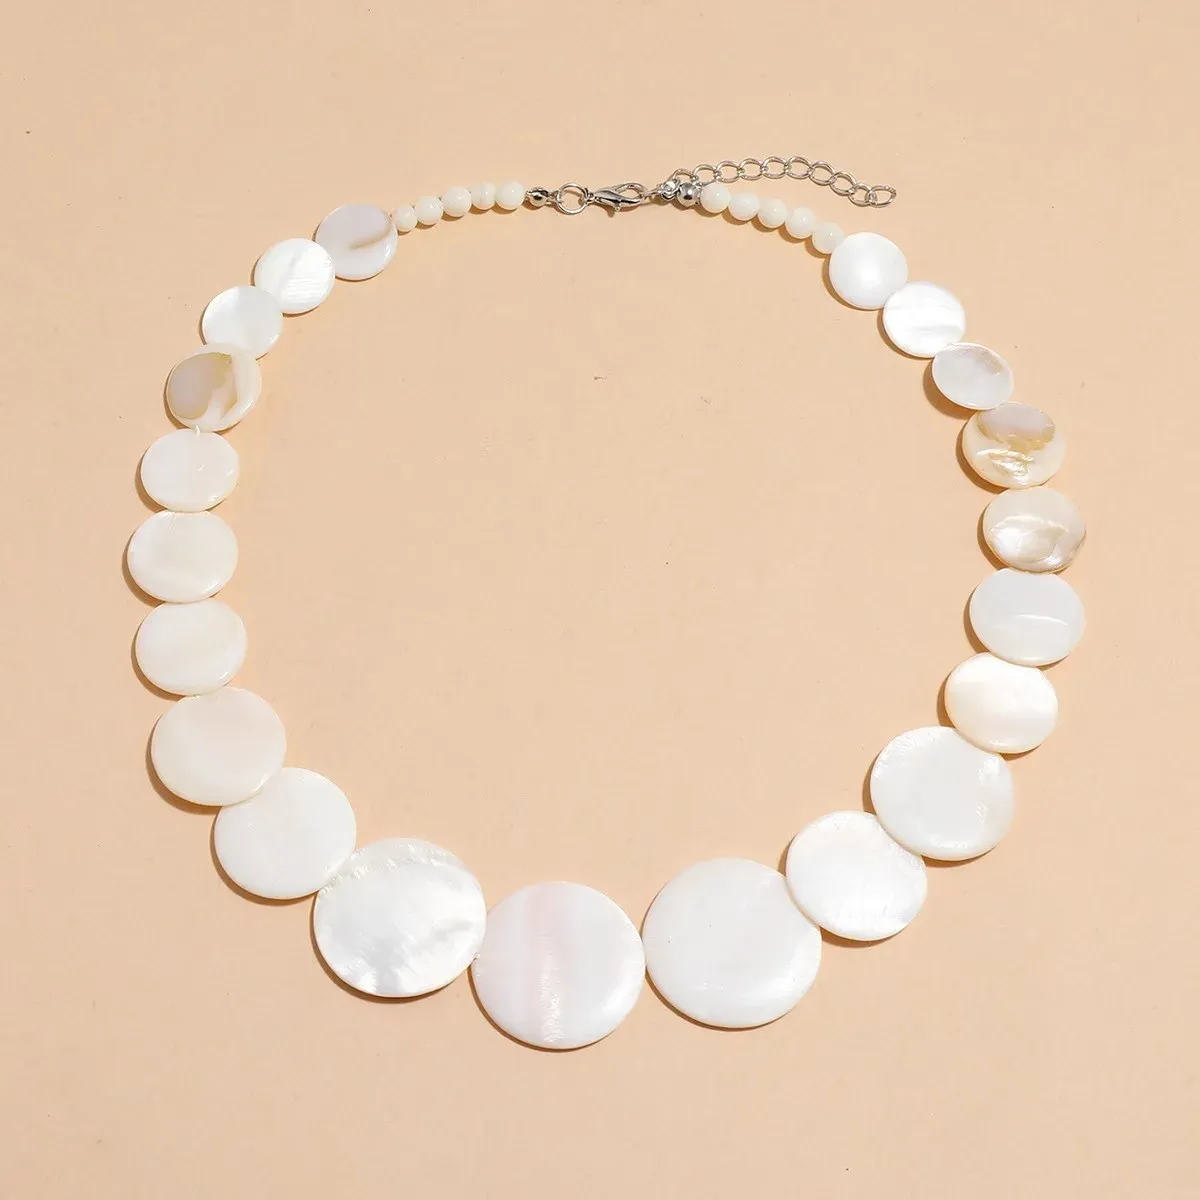 Colliers 1030 mm en coquille blanche naturelle La mère de perles perles rondes Choker Beach Classic Jewelry